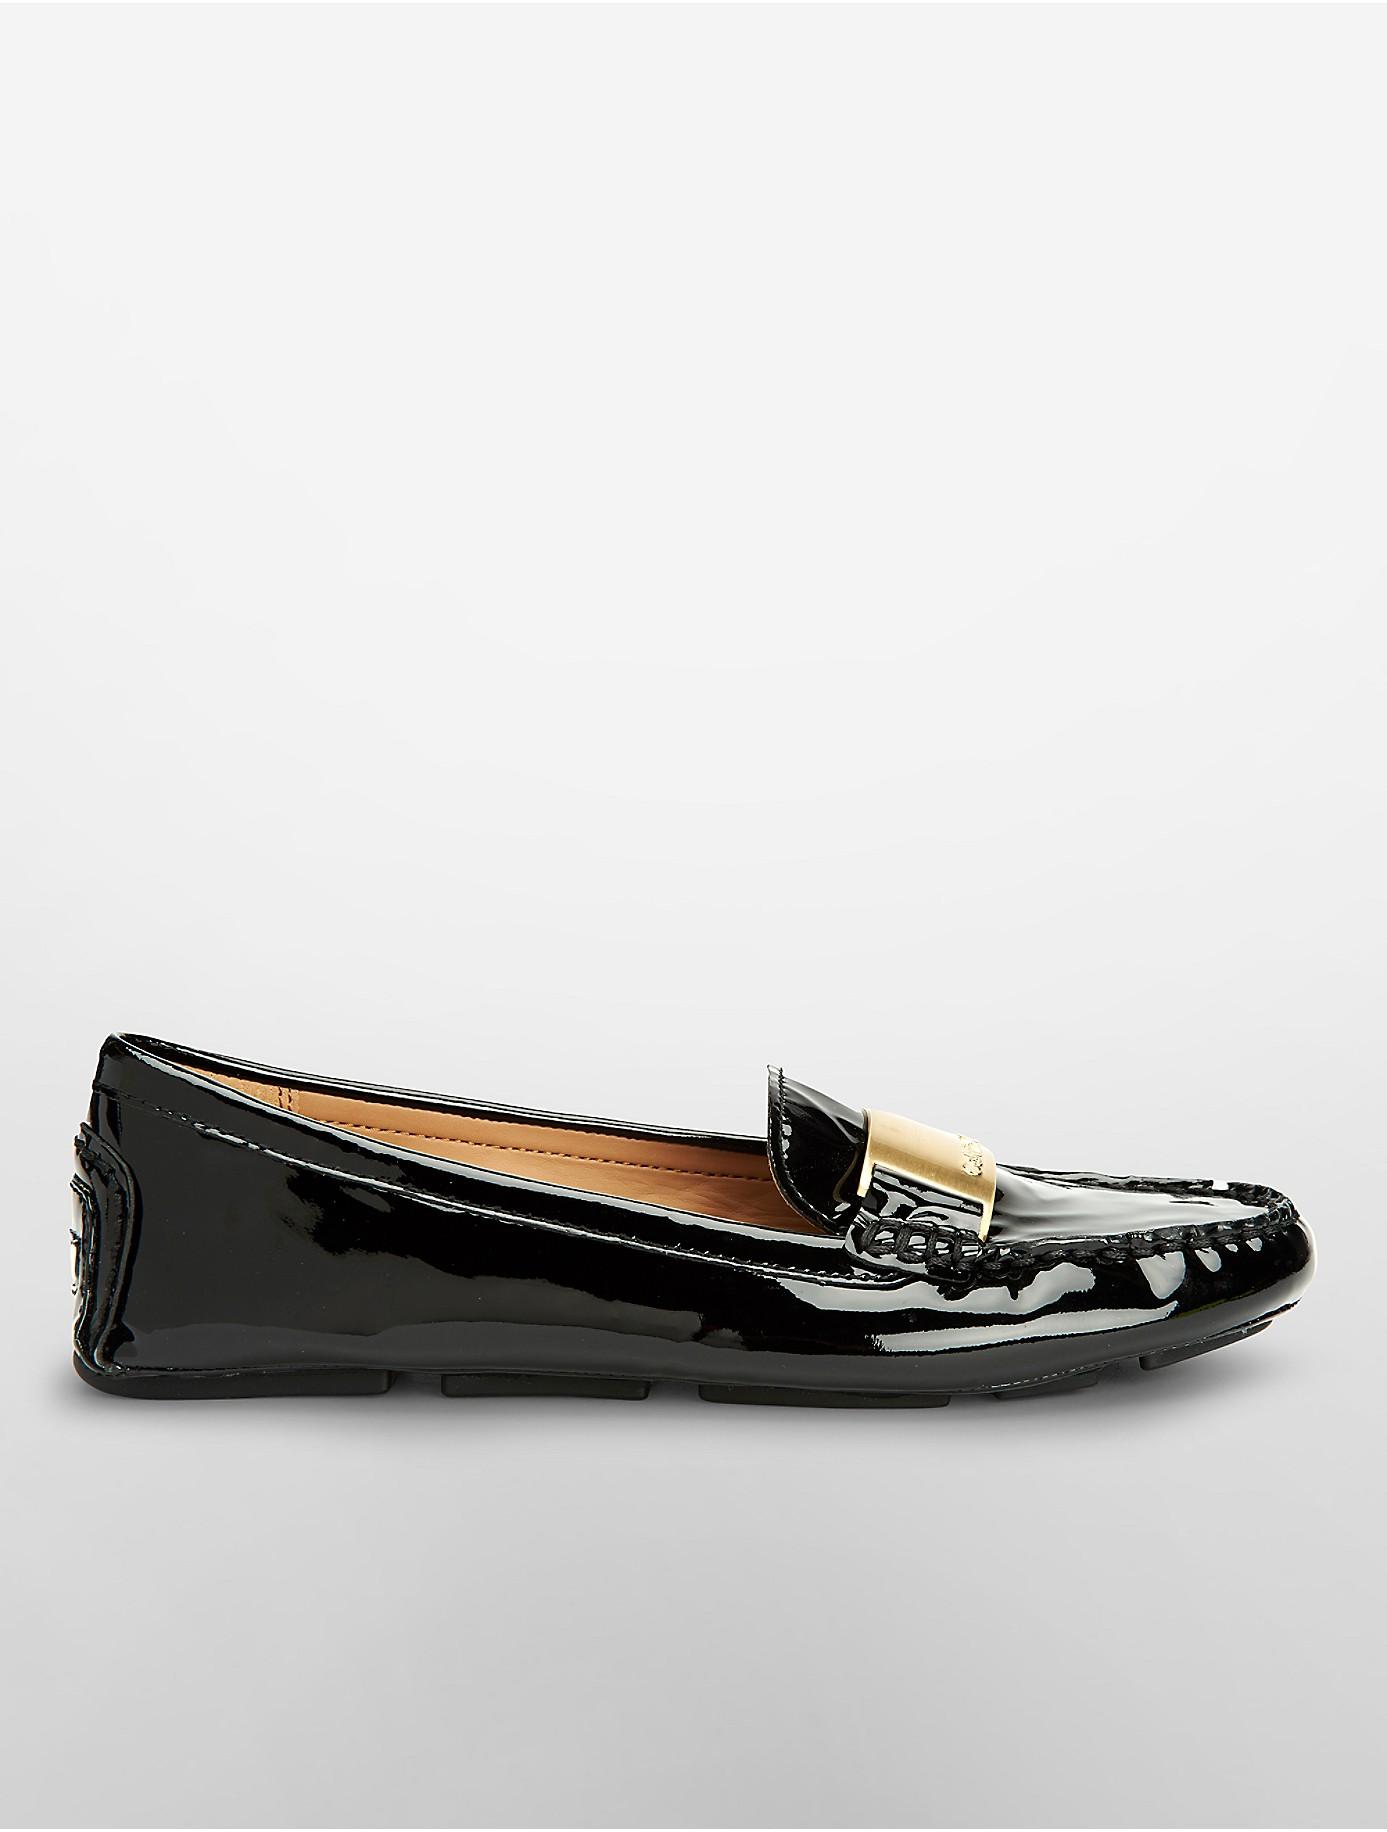 Calvin Klein Leather Lisette Patent Loafer in Black - Lyst